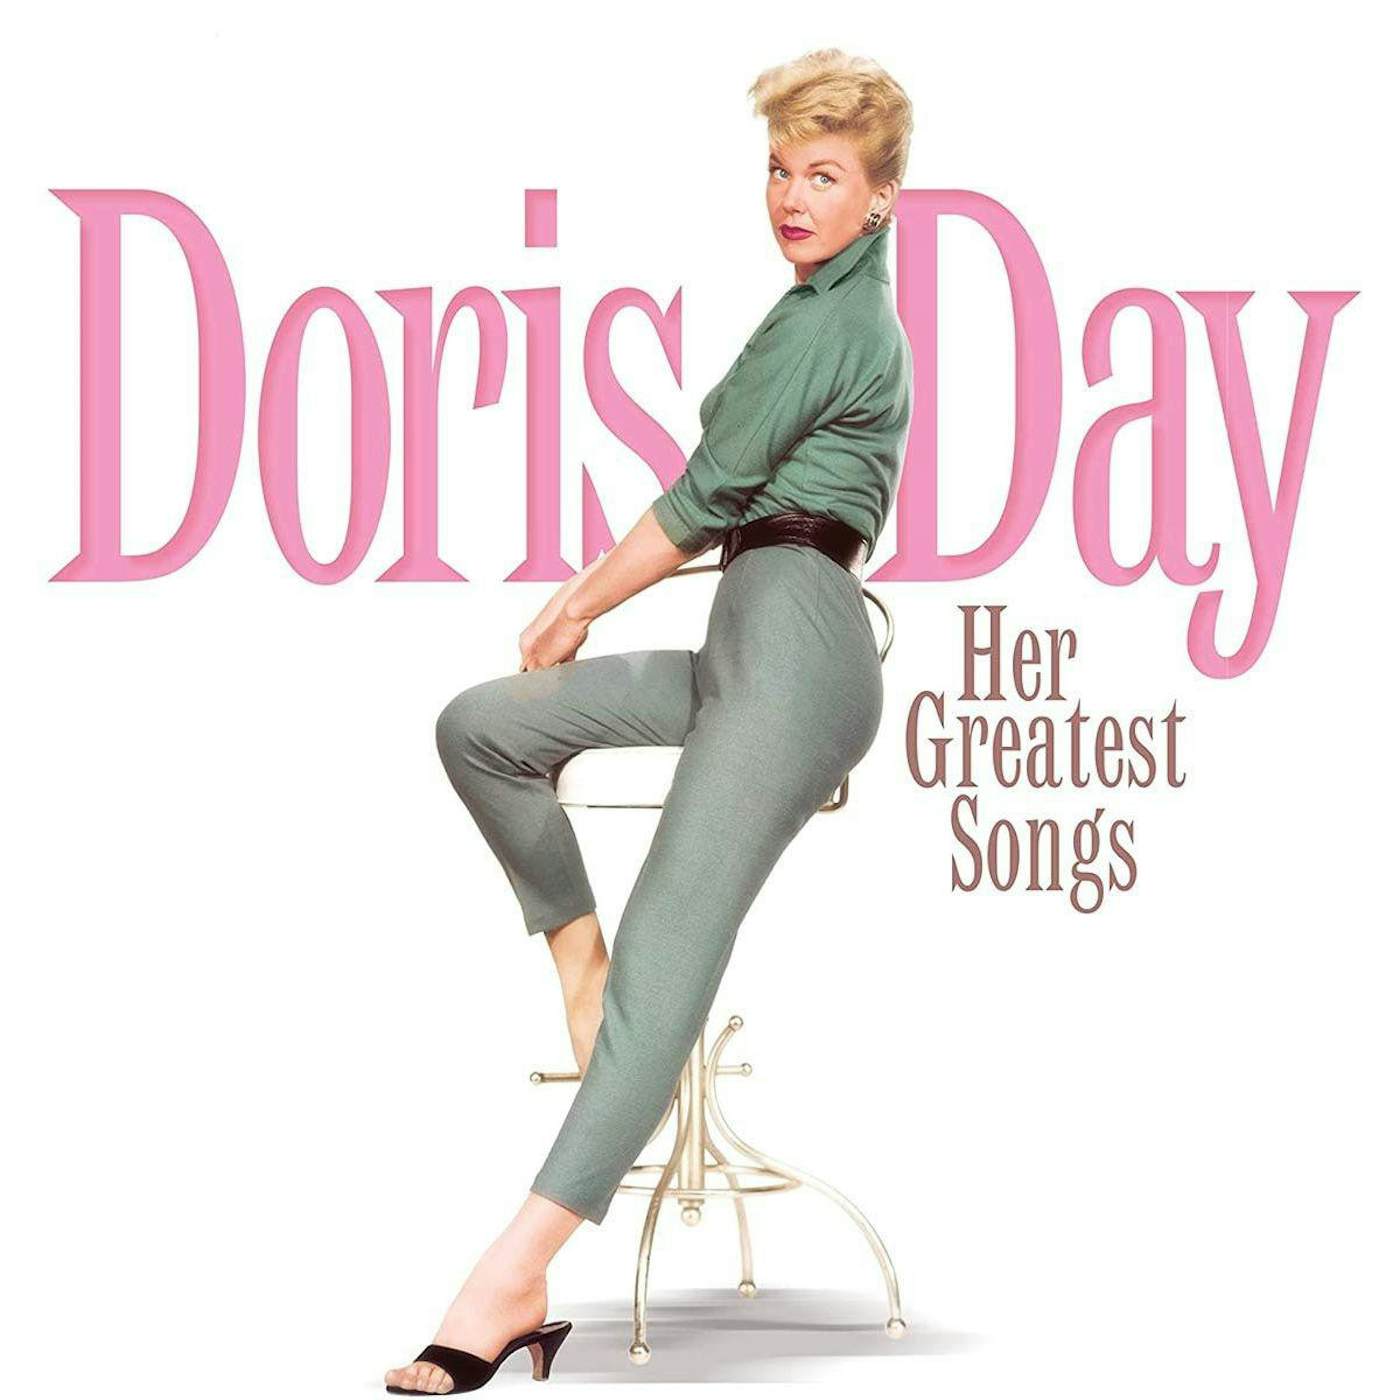 Doris Day LP Vinyl Record - Her Greatest Hits (Pink Vinyl)